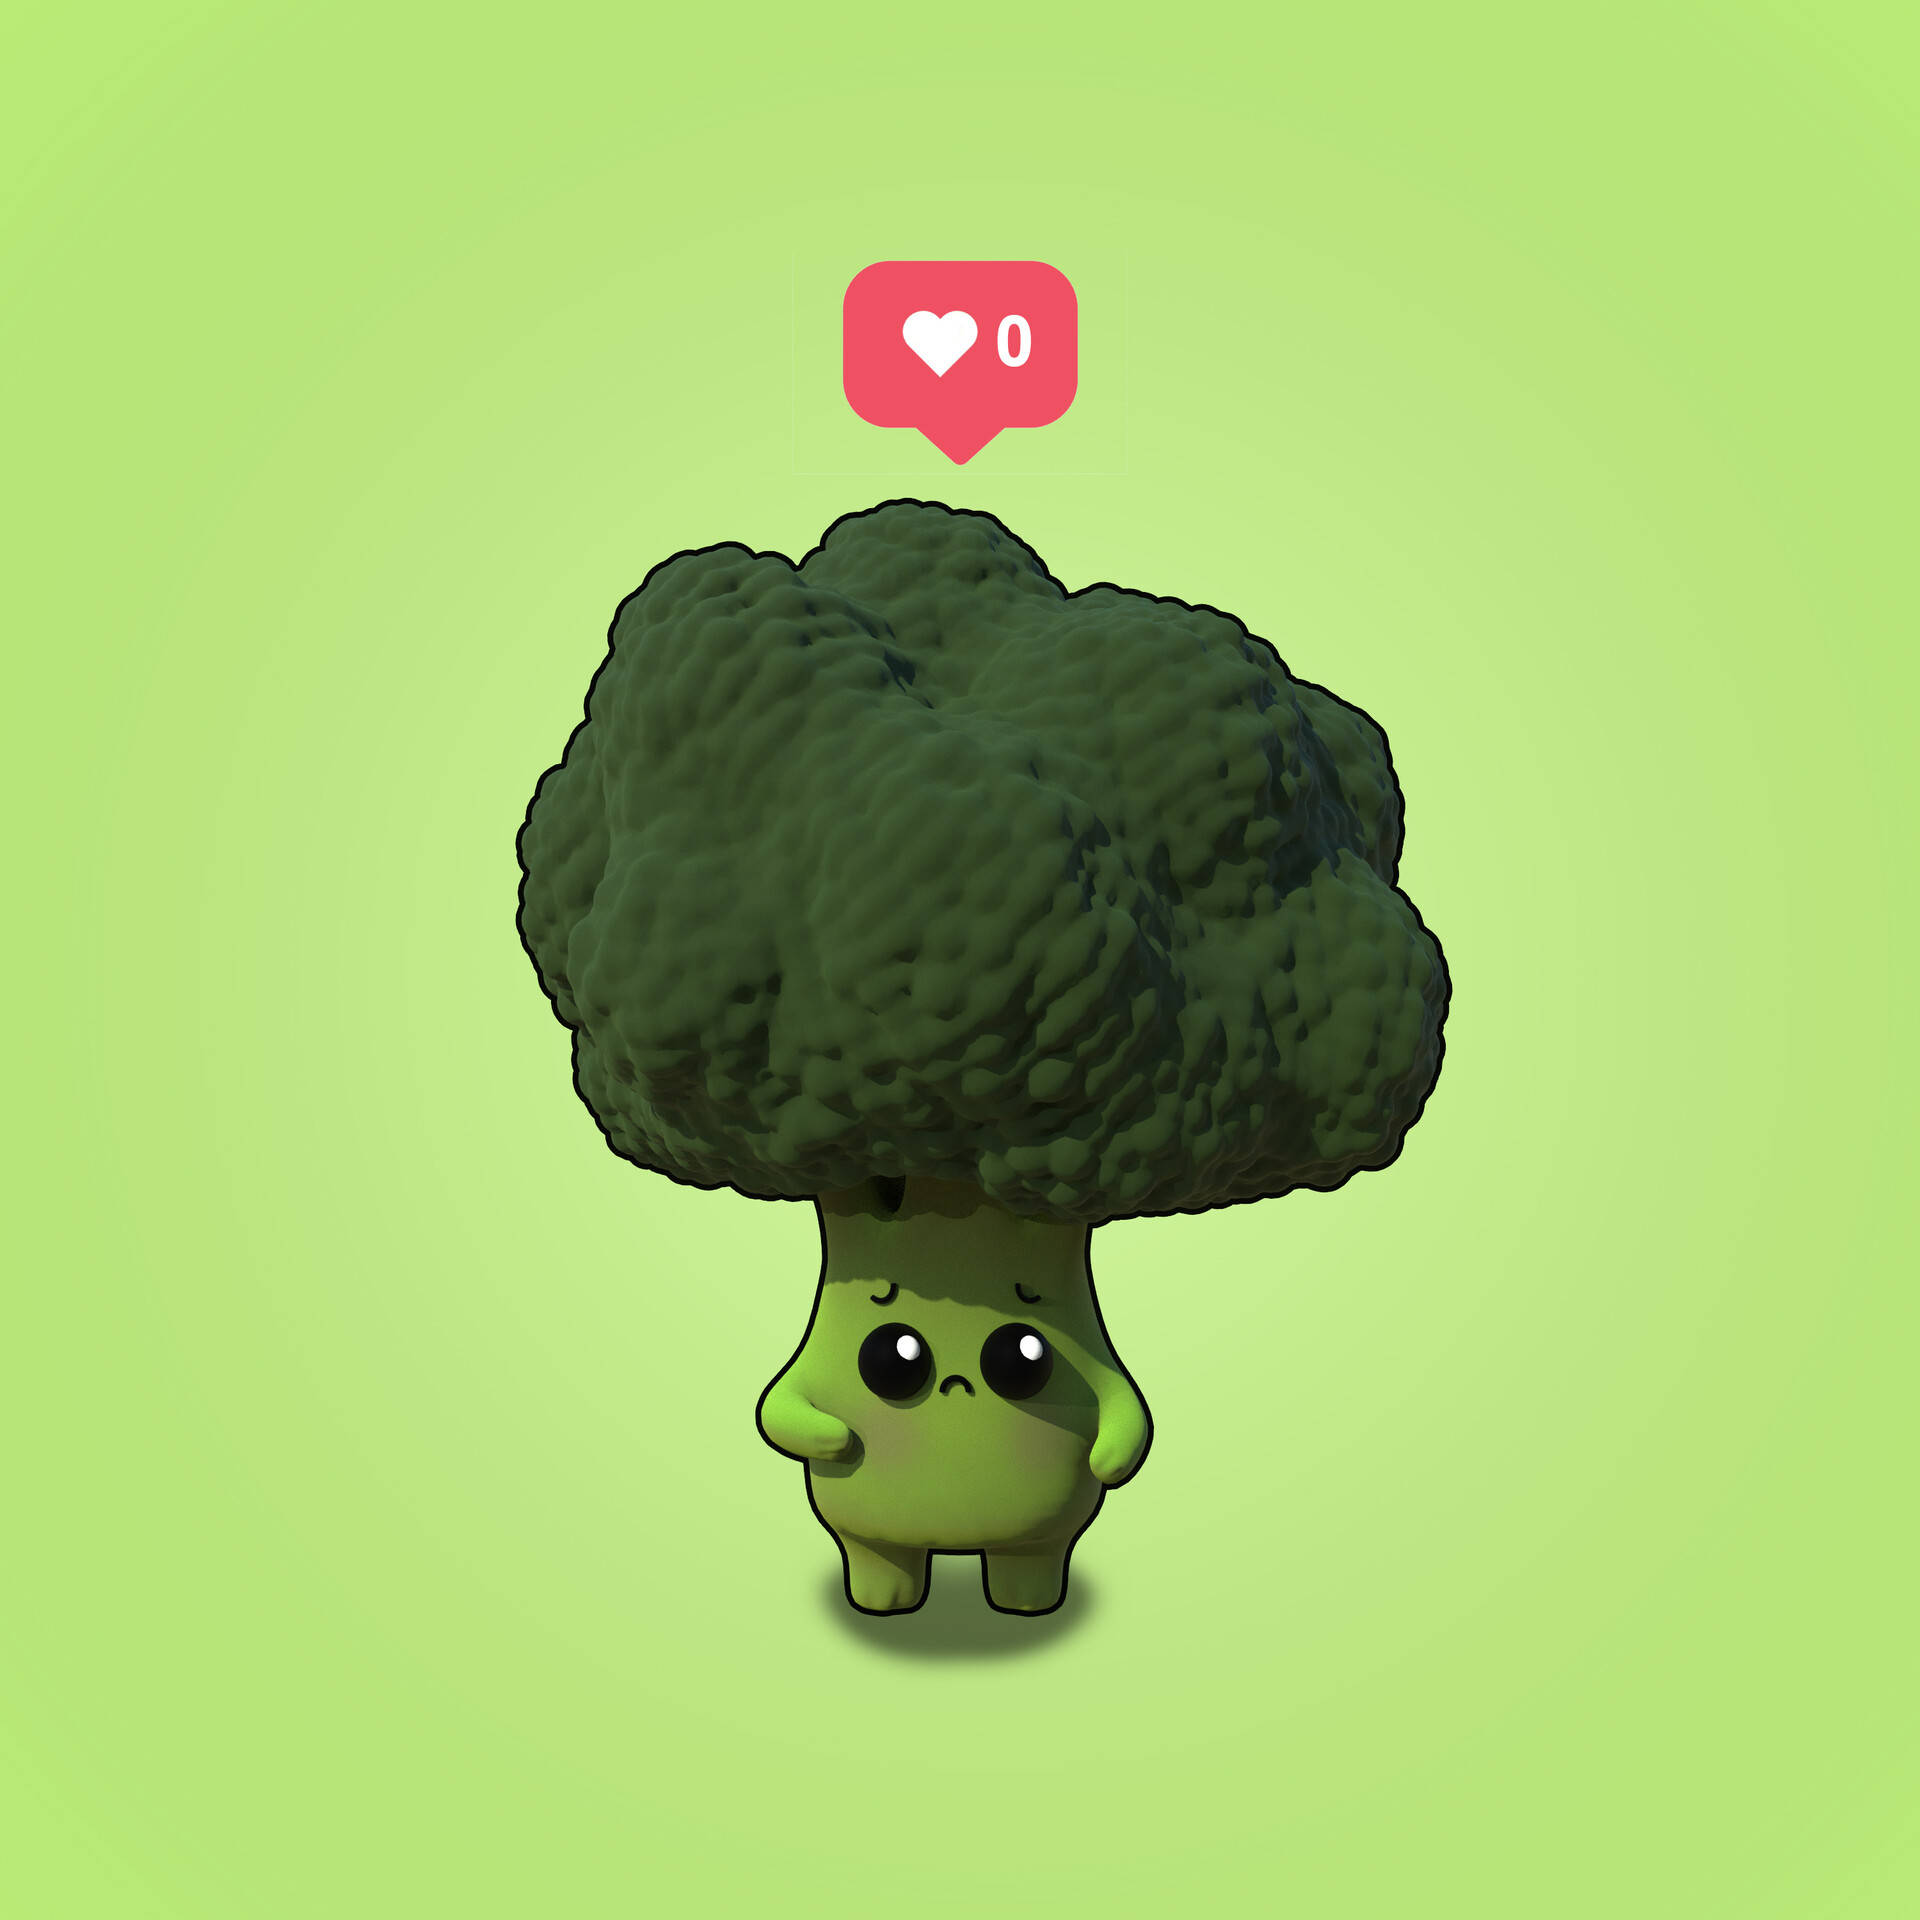 Sad Green Broccoli With Heart